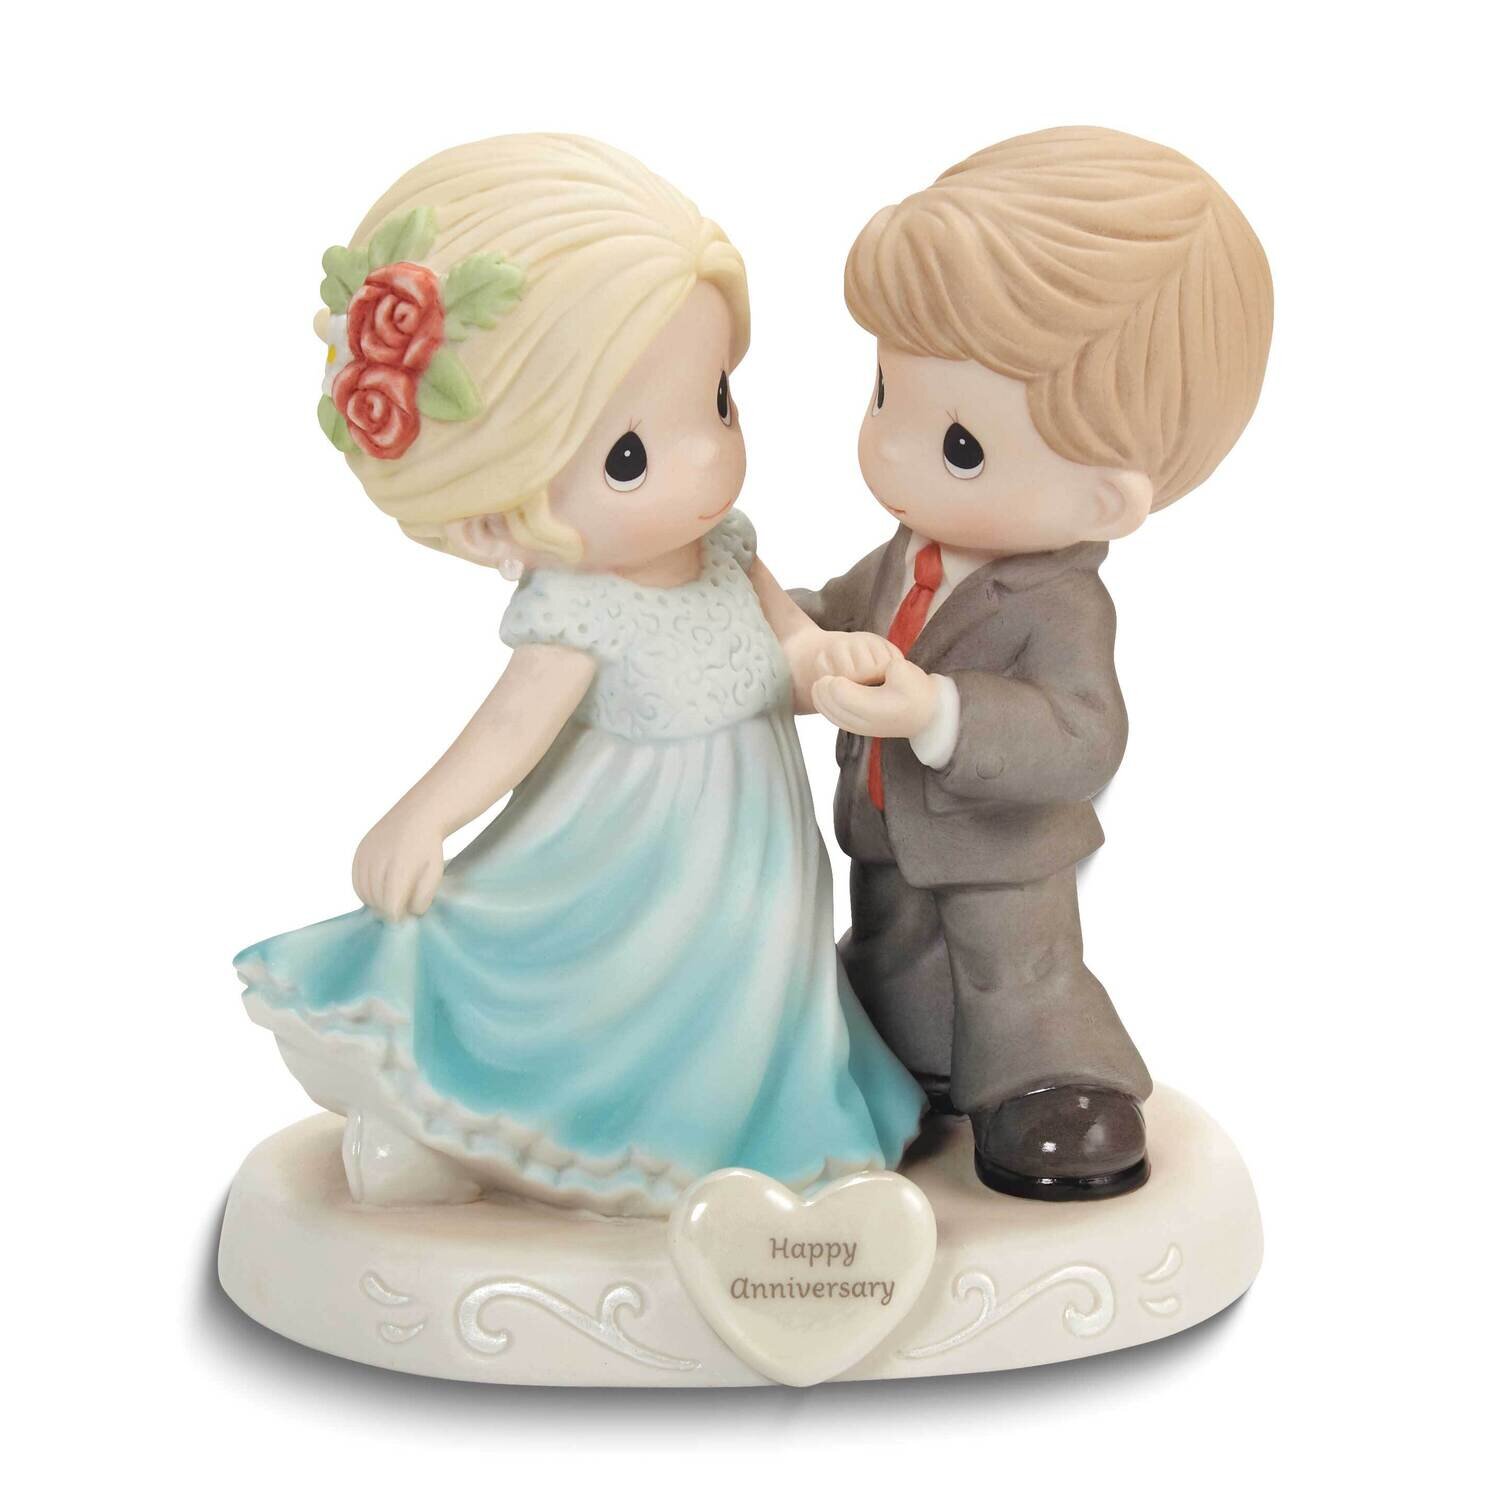 Precious Moments Couple Dressed For Anniversary Celebration Figurine GM25326